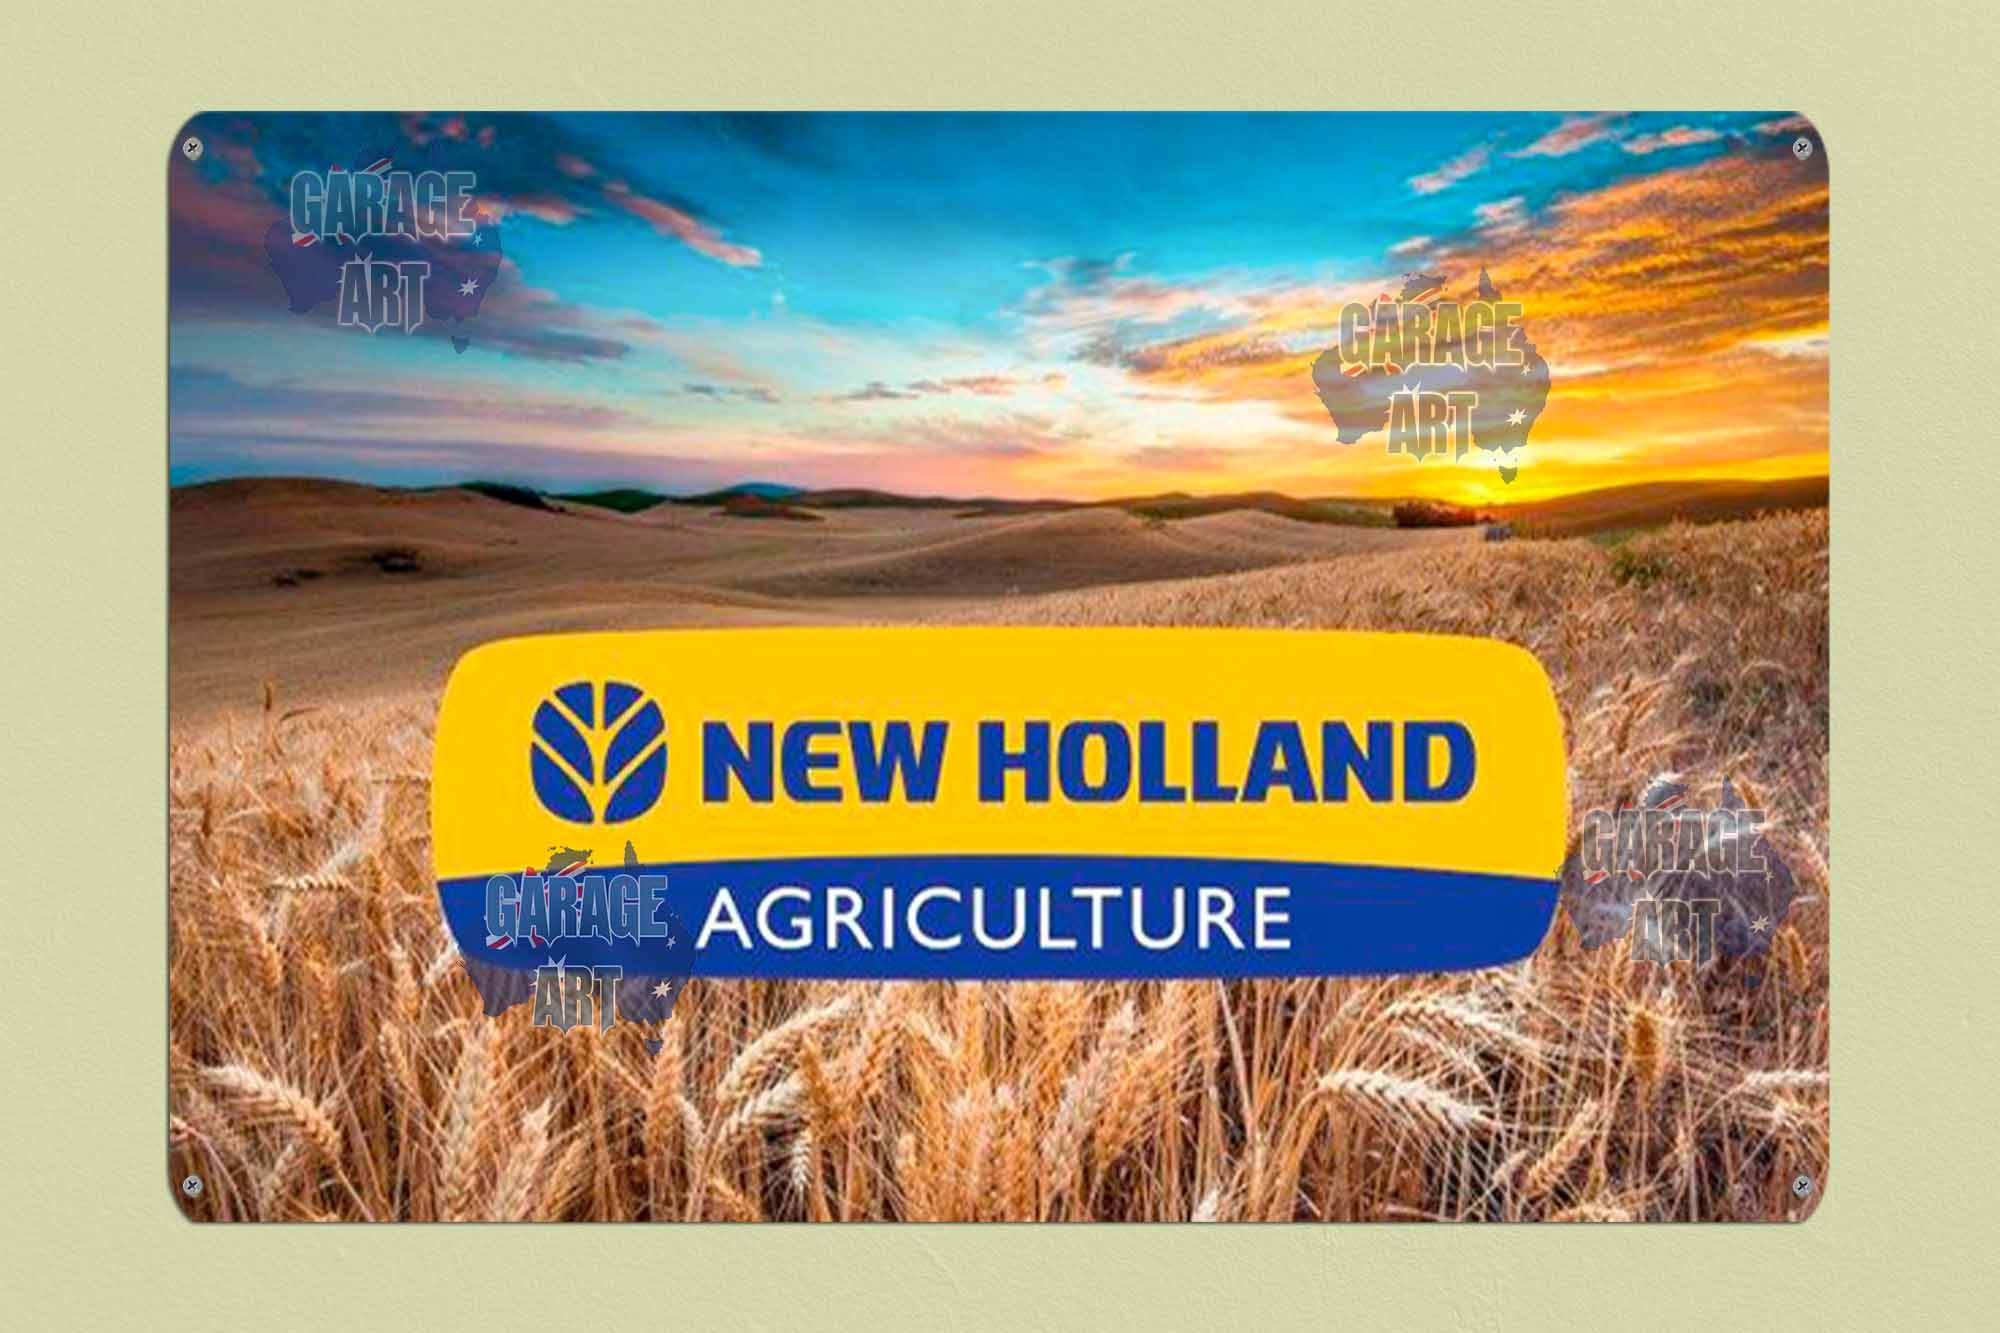 New Holland Agriculture 600mmx400mm Tin Sign freeshipping - garageartaustralia